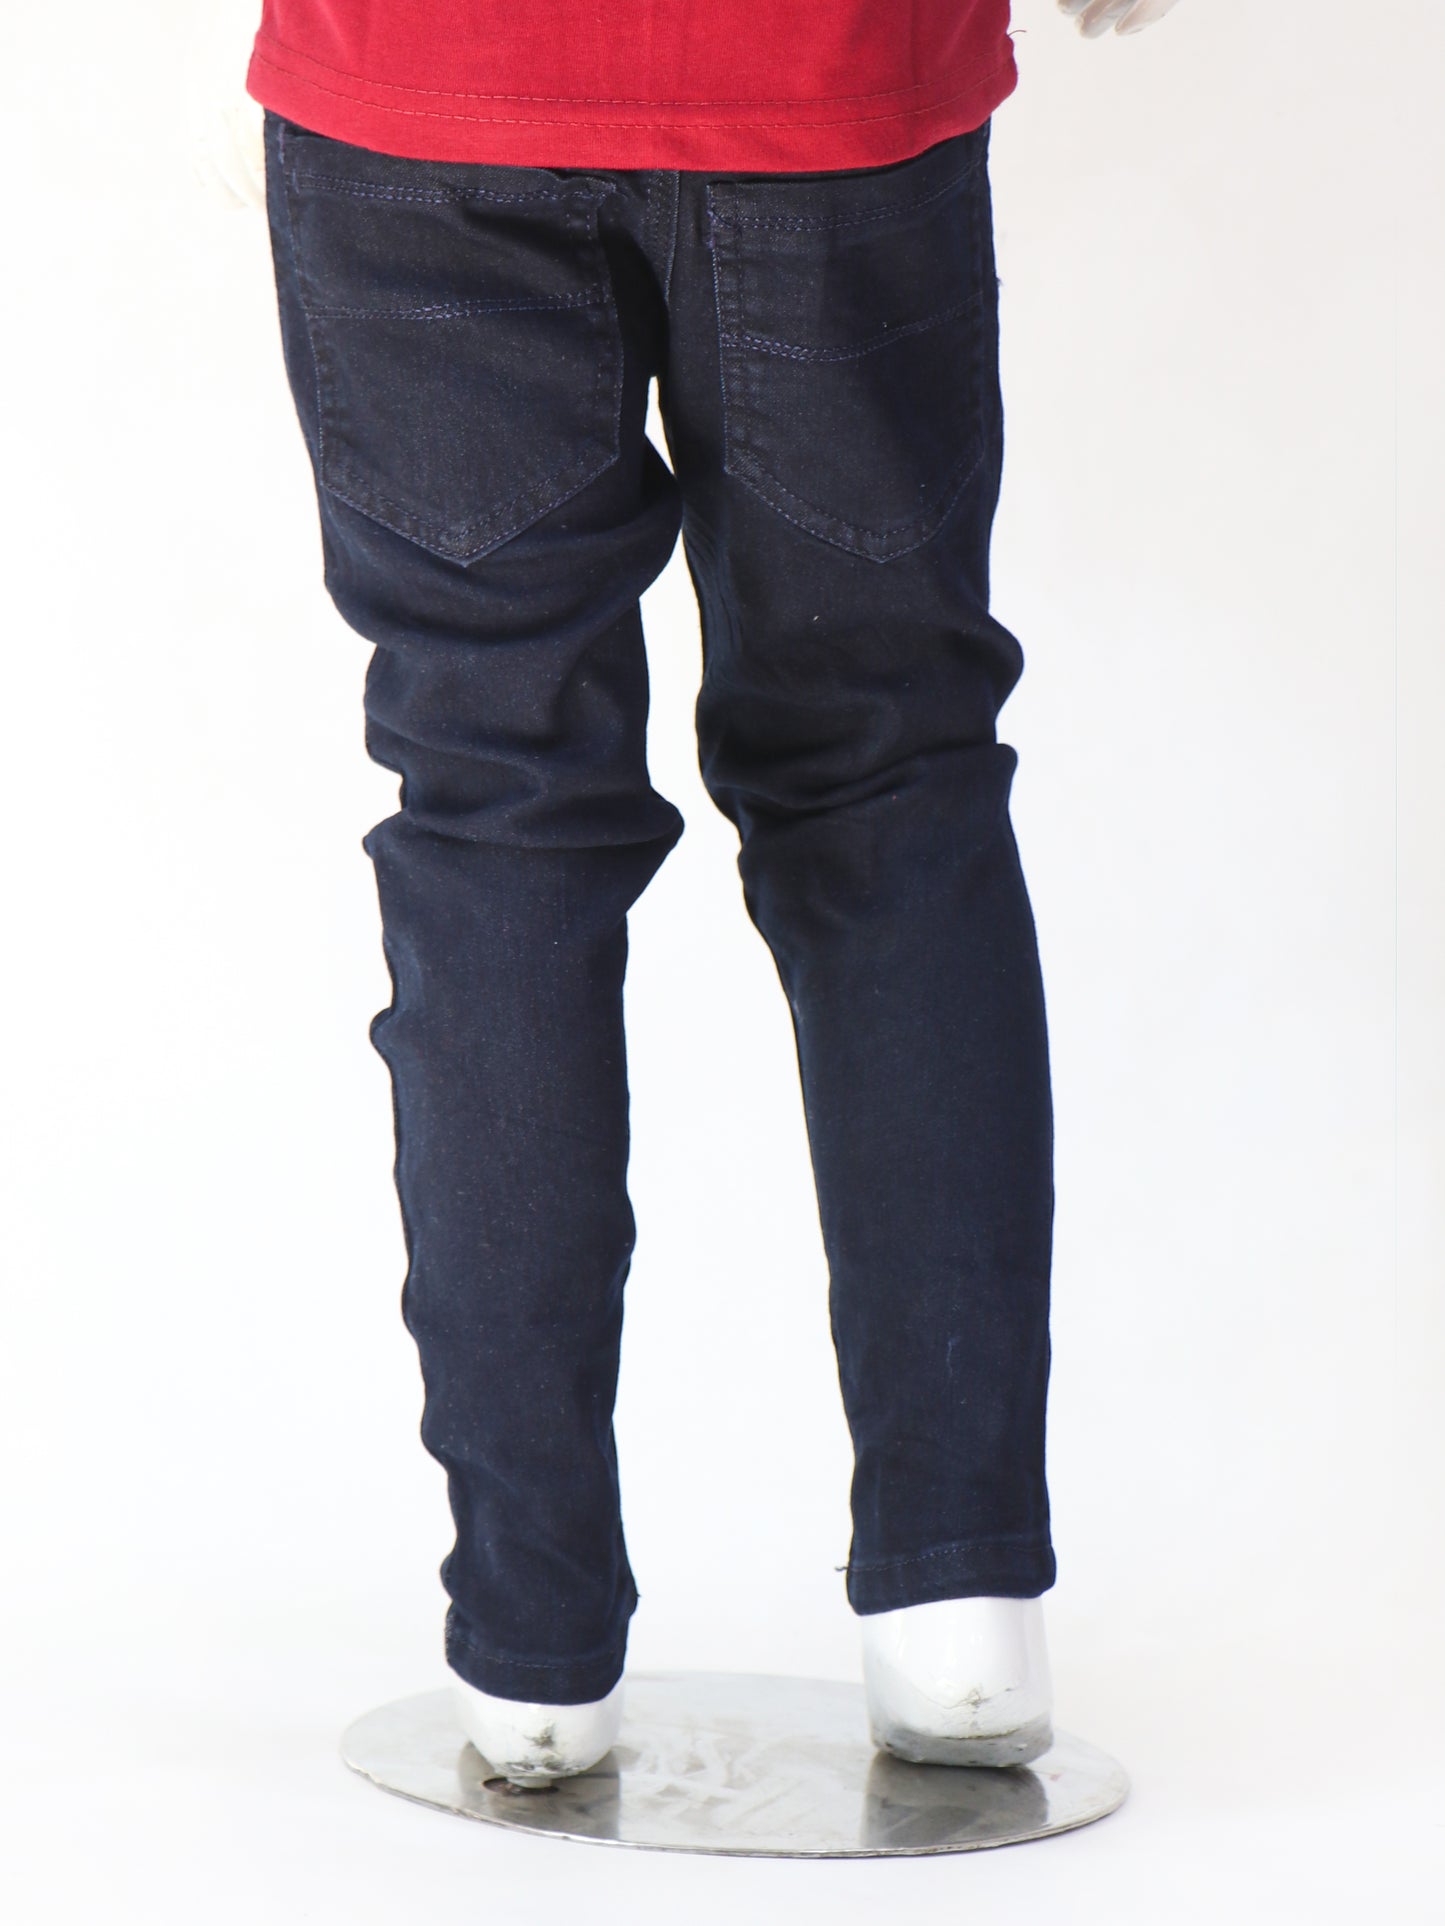 Boys Stretchable Denim Jeans 5Yrs - 13Yrs Black